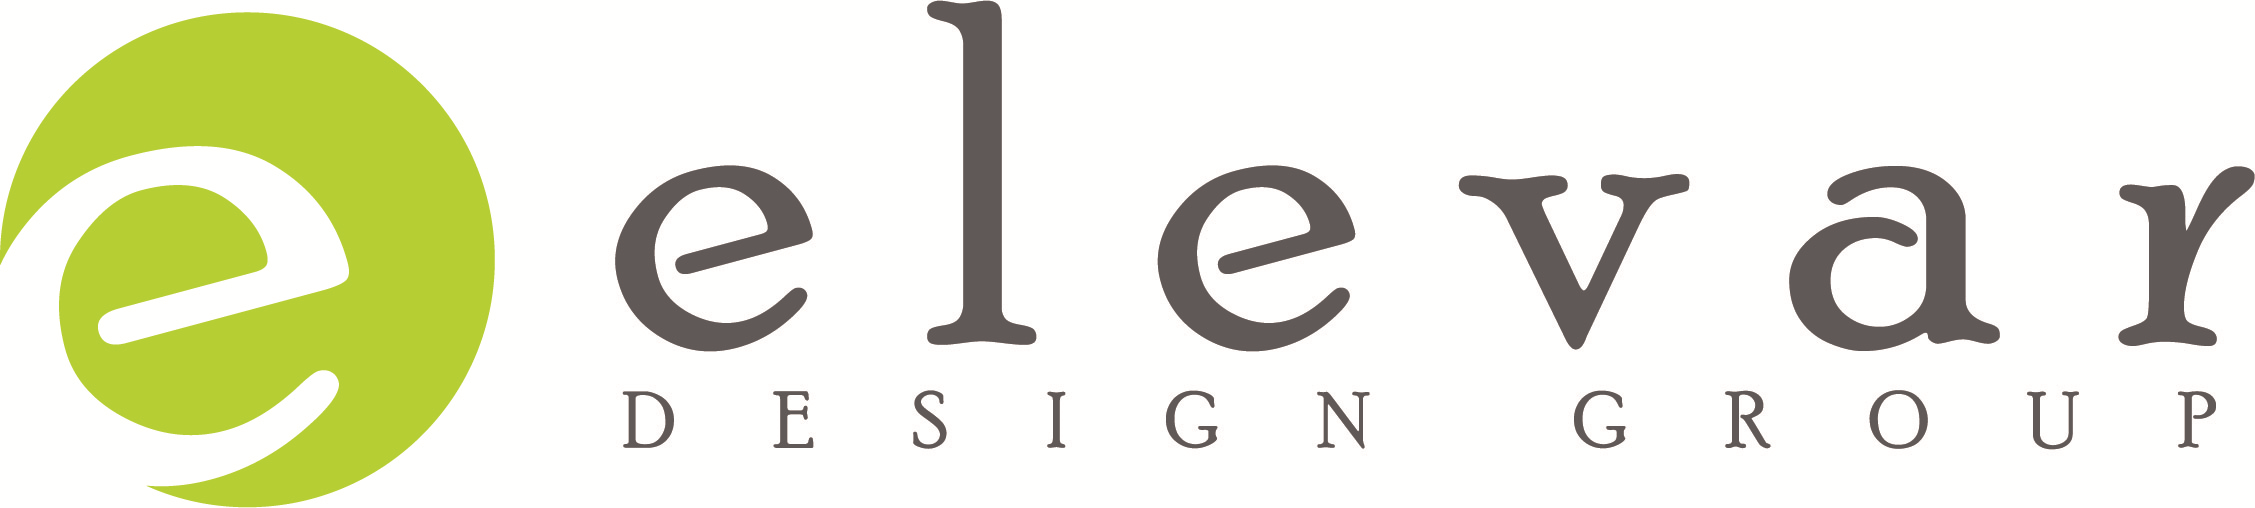 Elevar Design Group Company Logo